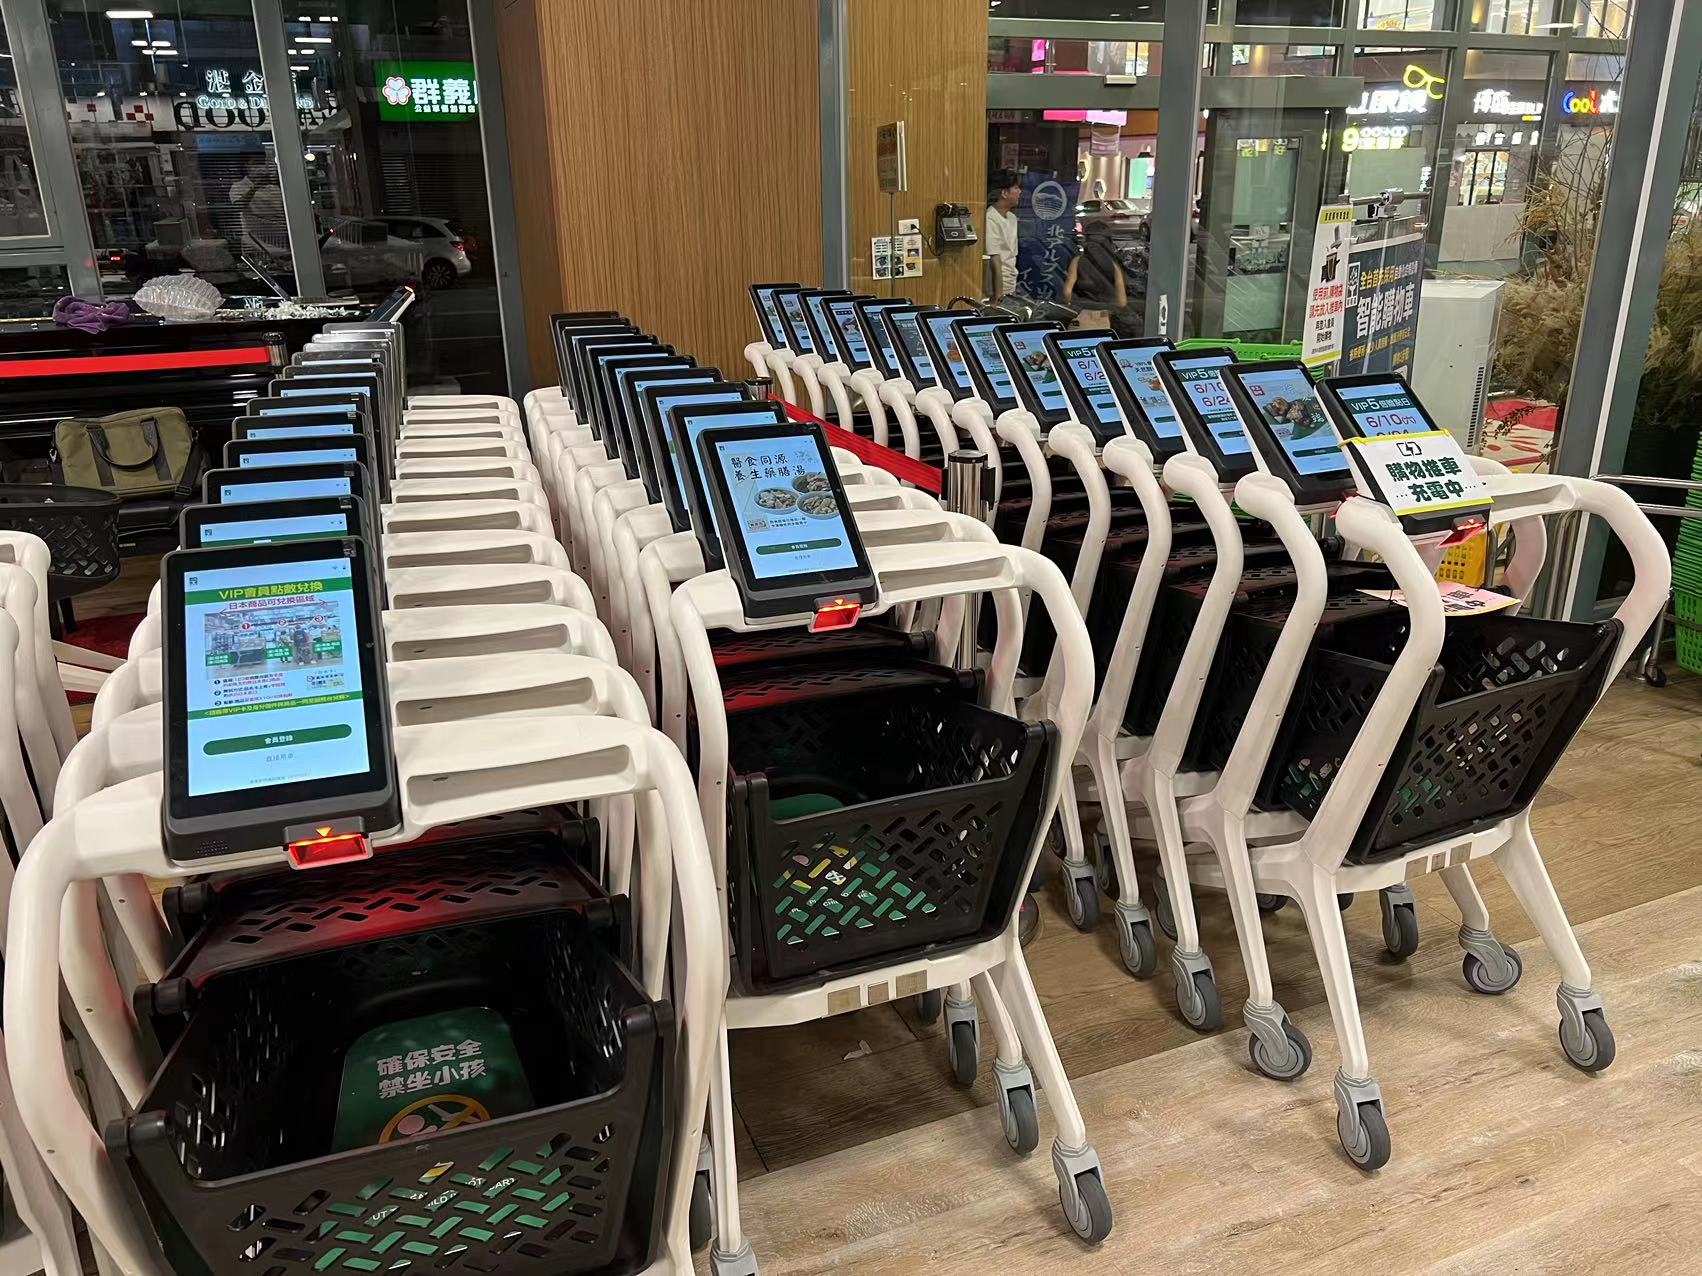 SuperHii brings self-checkout shopping carts to Taiwan supermarkets